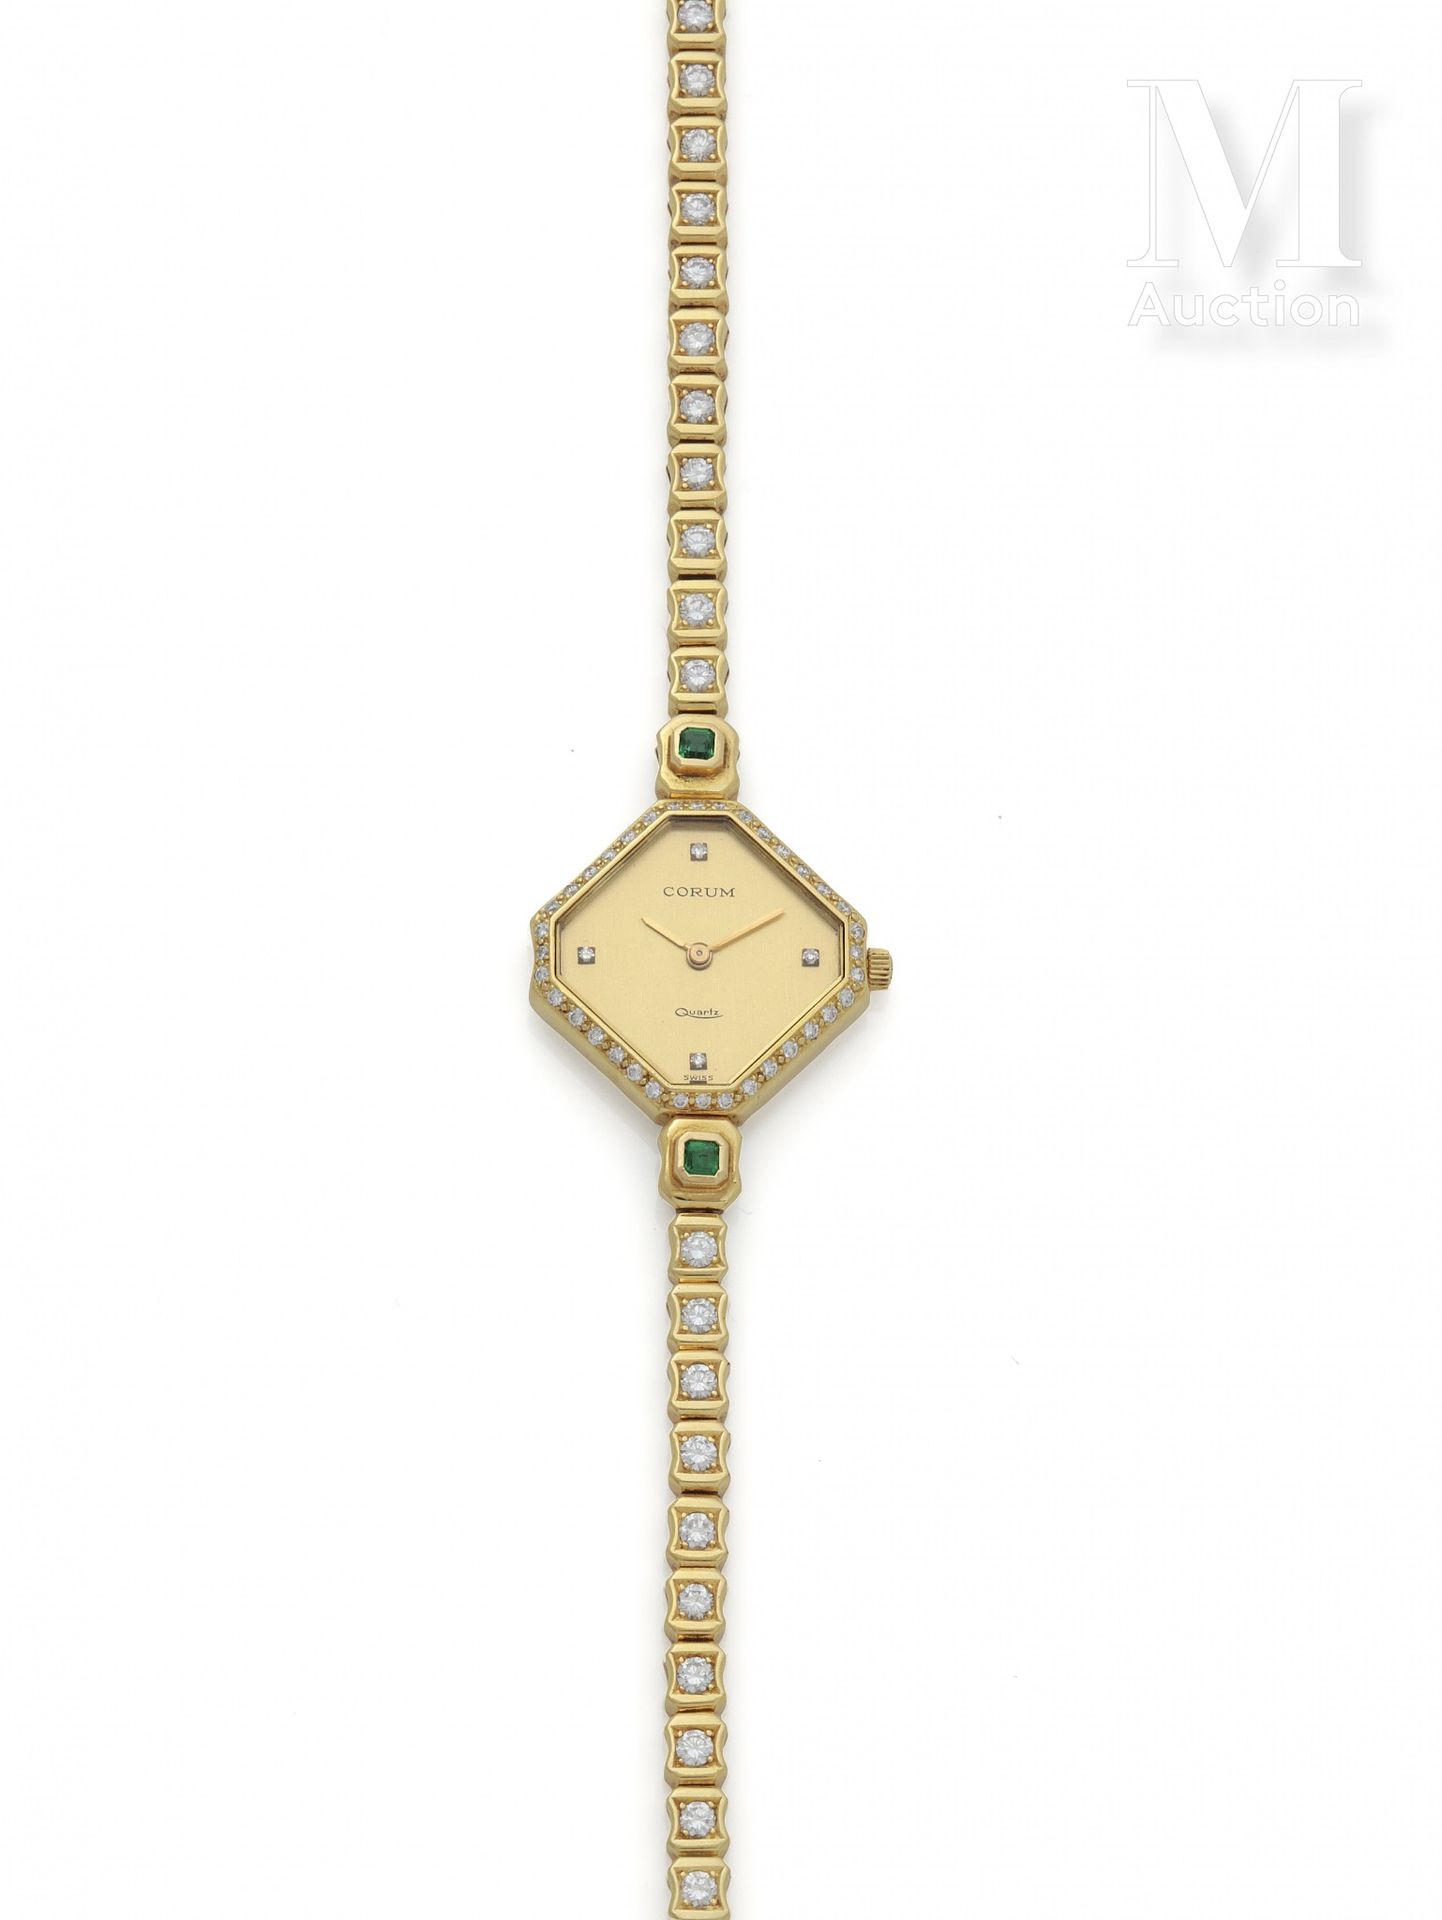 CORUM pour MELLERIO 女式手表

约1970年

签名的18K金表壳

石英机芯

尺寸：21x21mm

18K金手镯，镶嵌钻石和两颗封闭式&hellip;